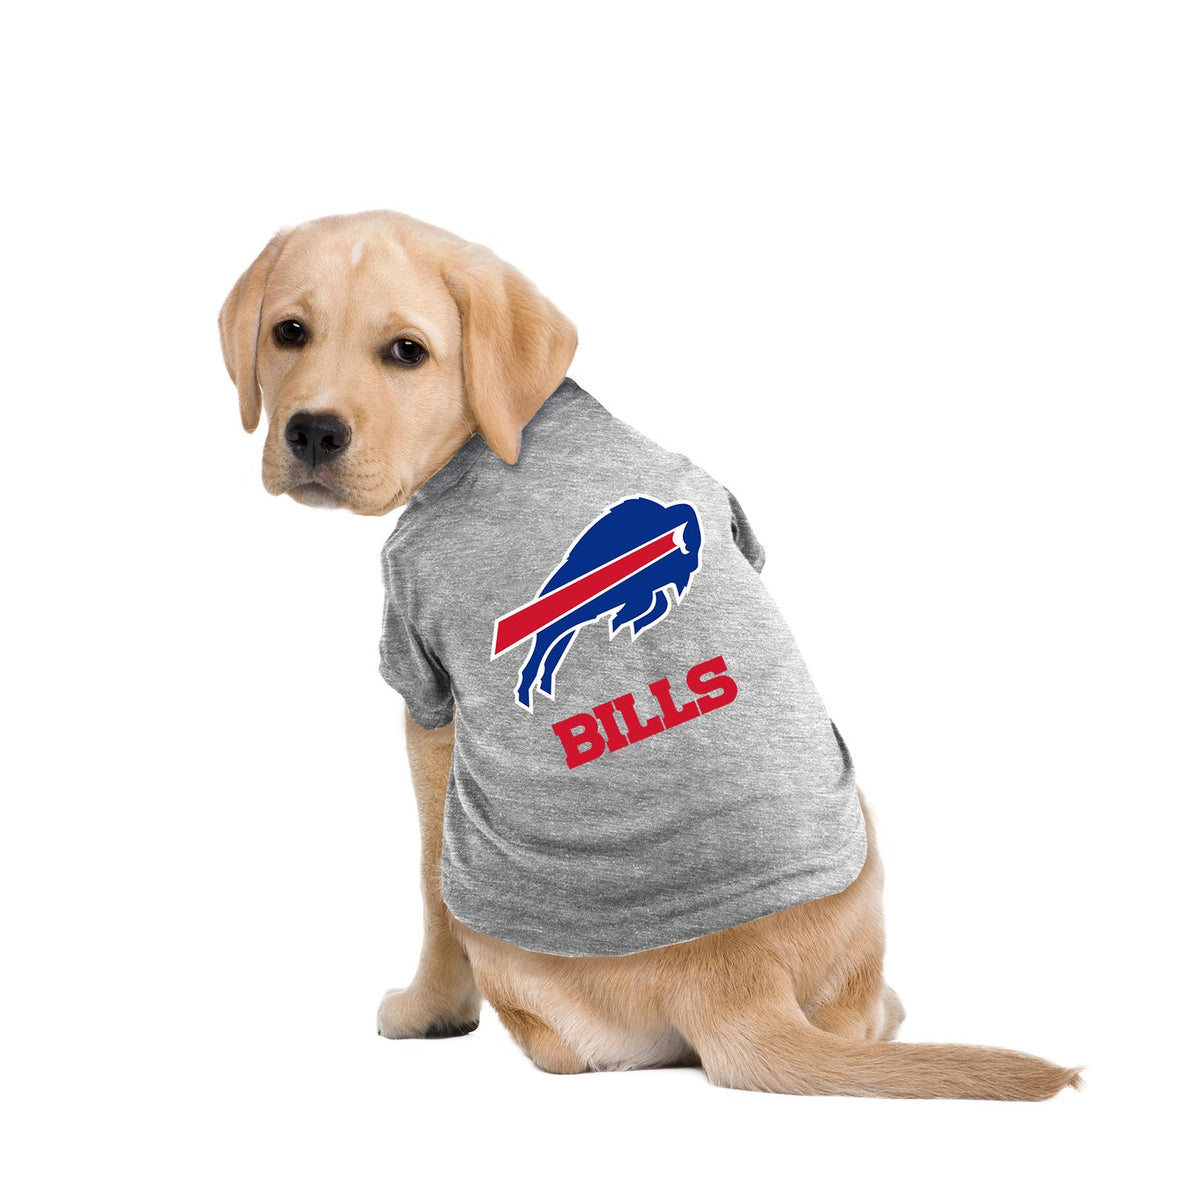 Buffalo Bills Tee Shirt